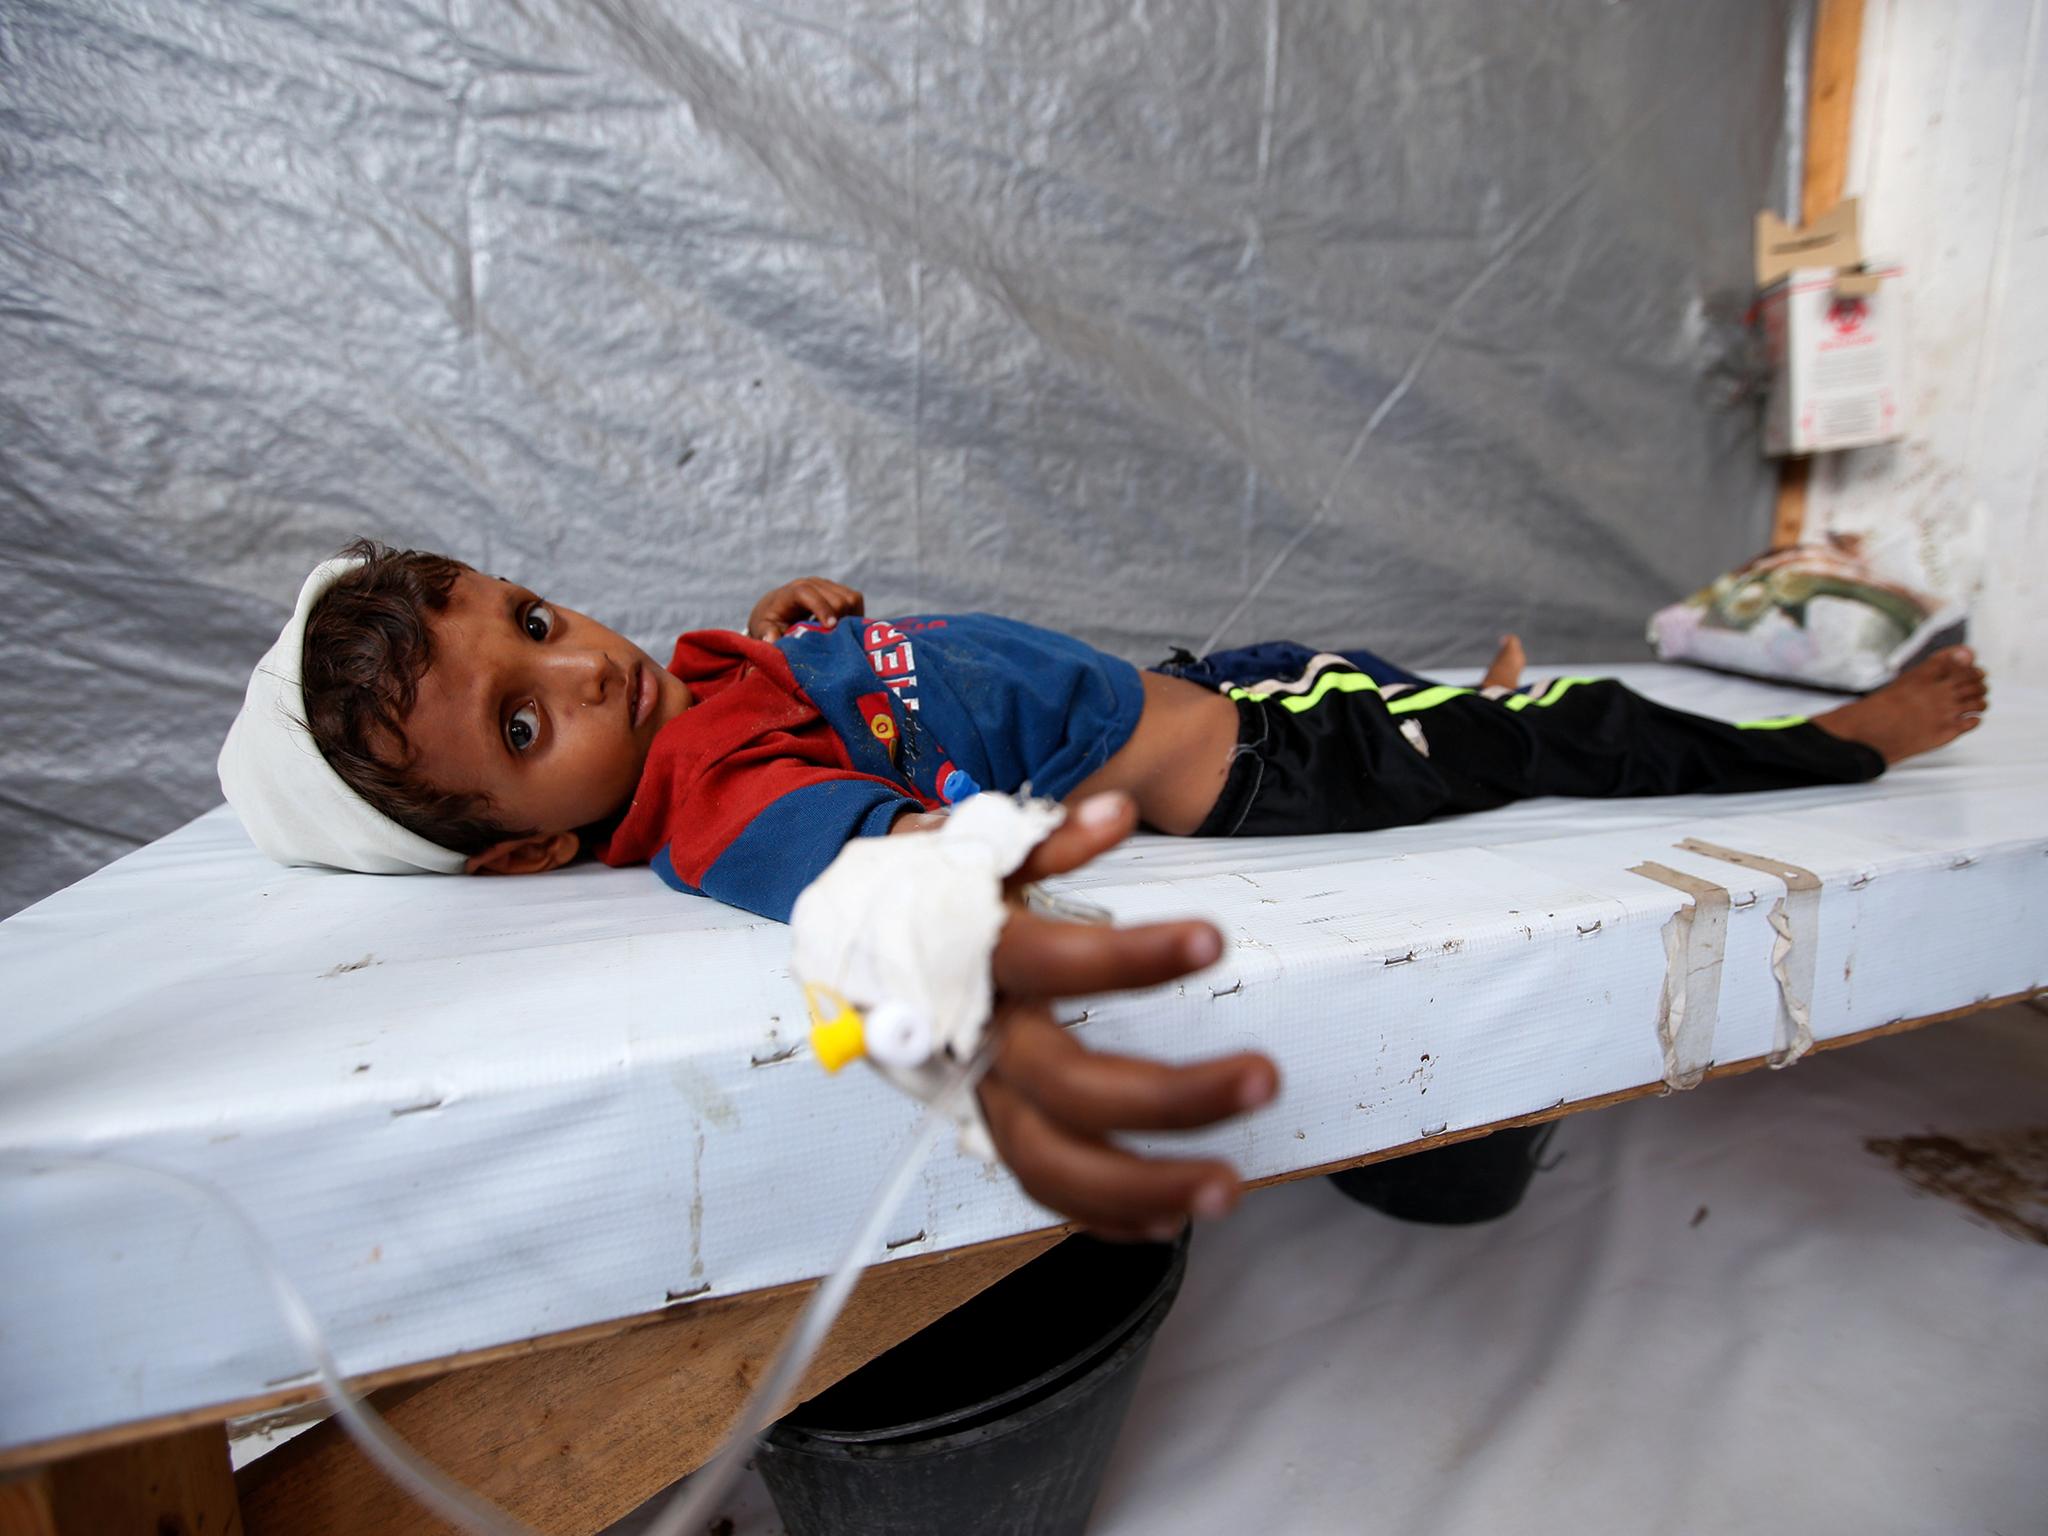 A child victim of cholera in Yemen